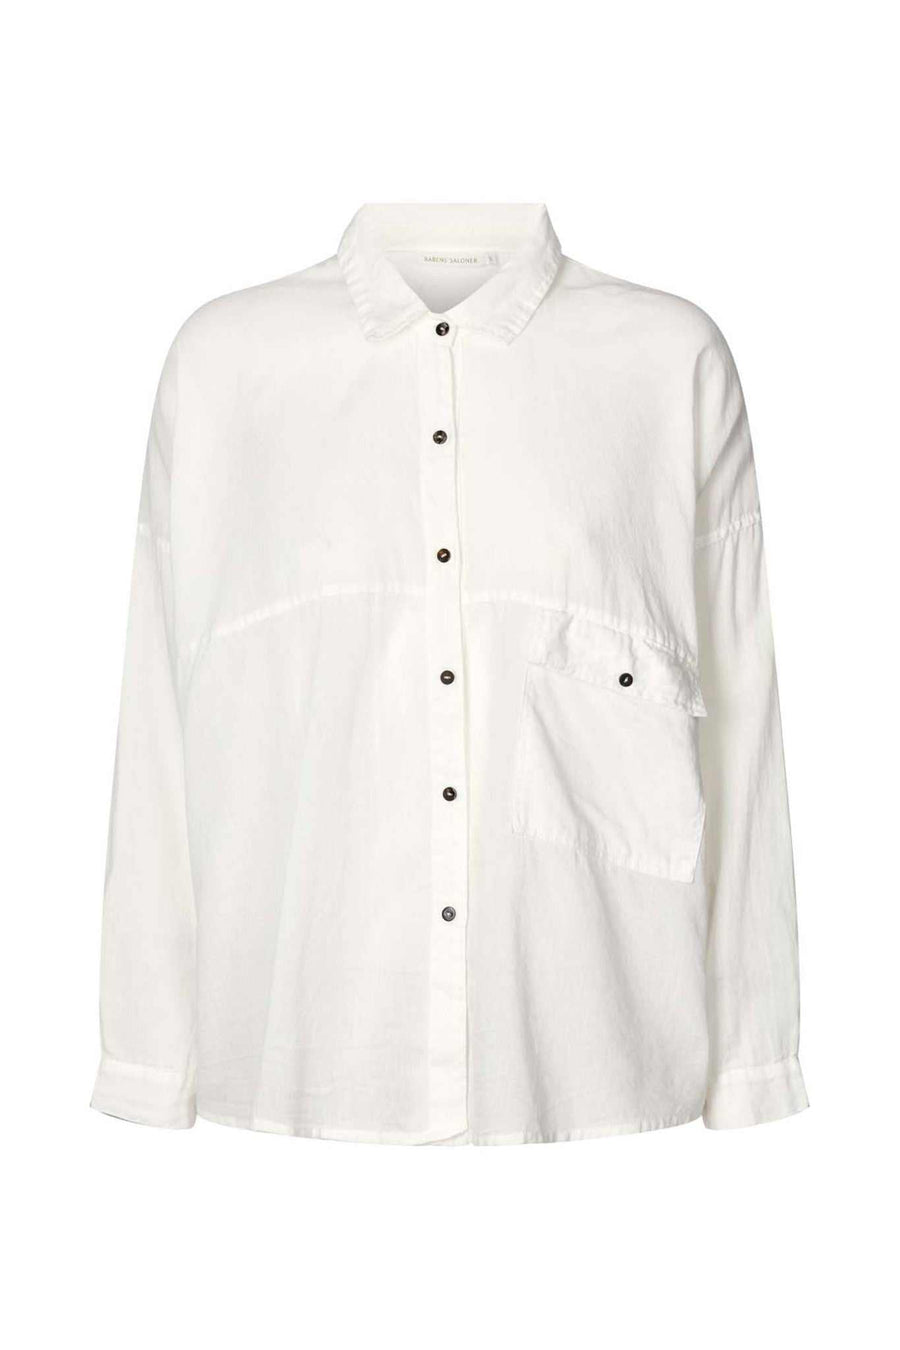 Rabens Saloner Astrid Cotton Pocket Shirt White